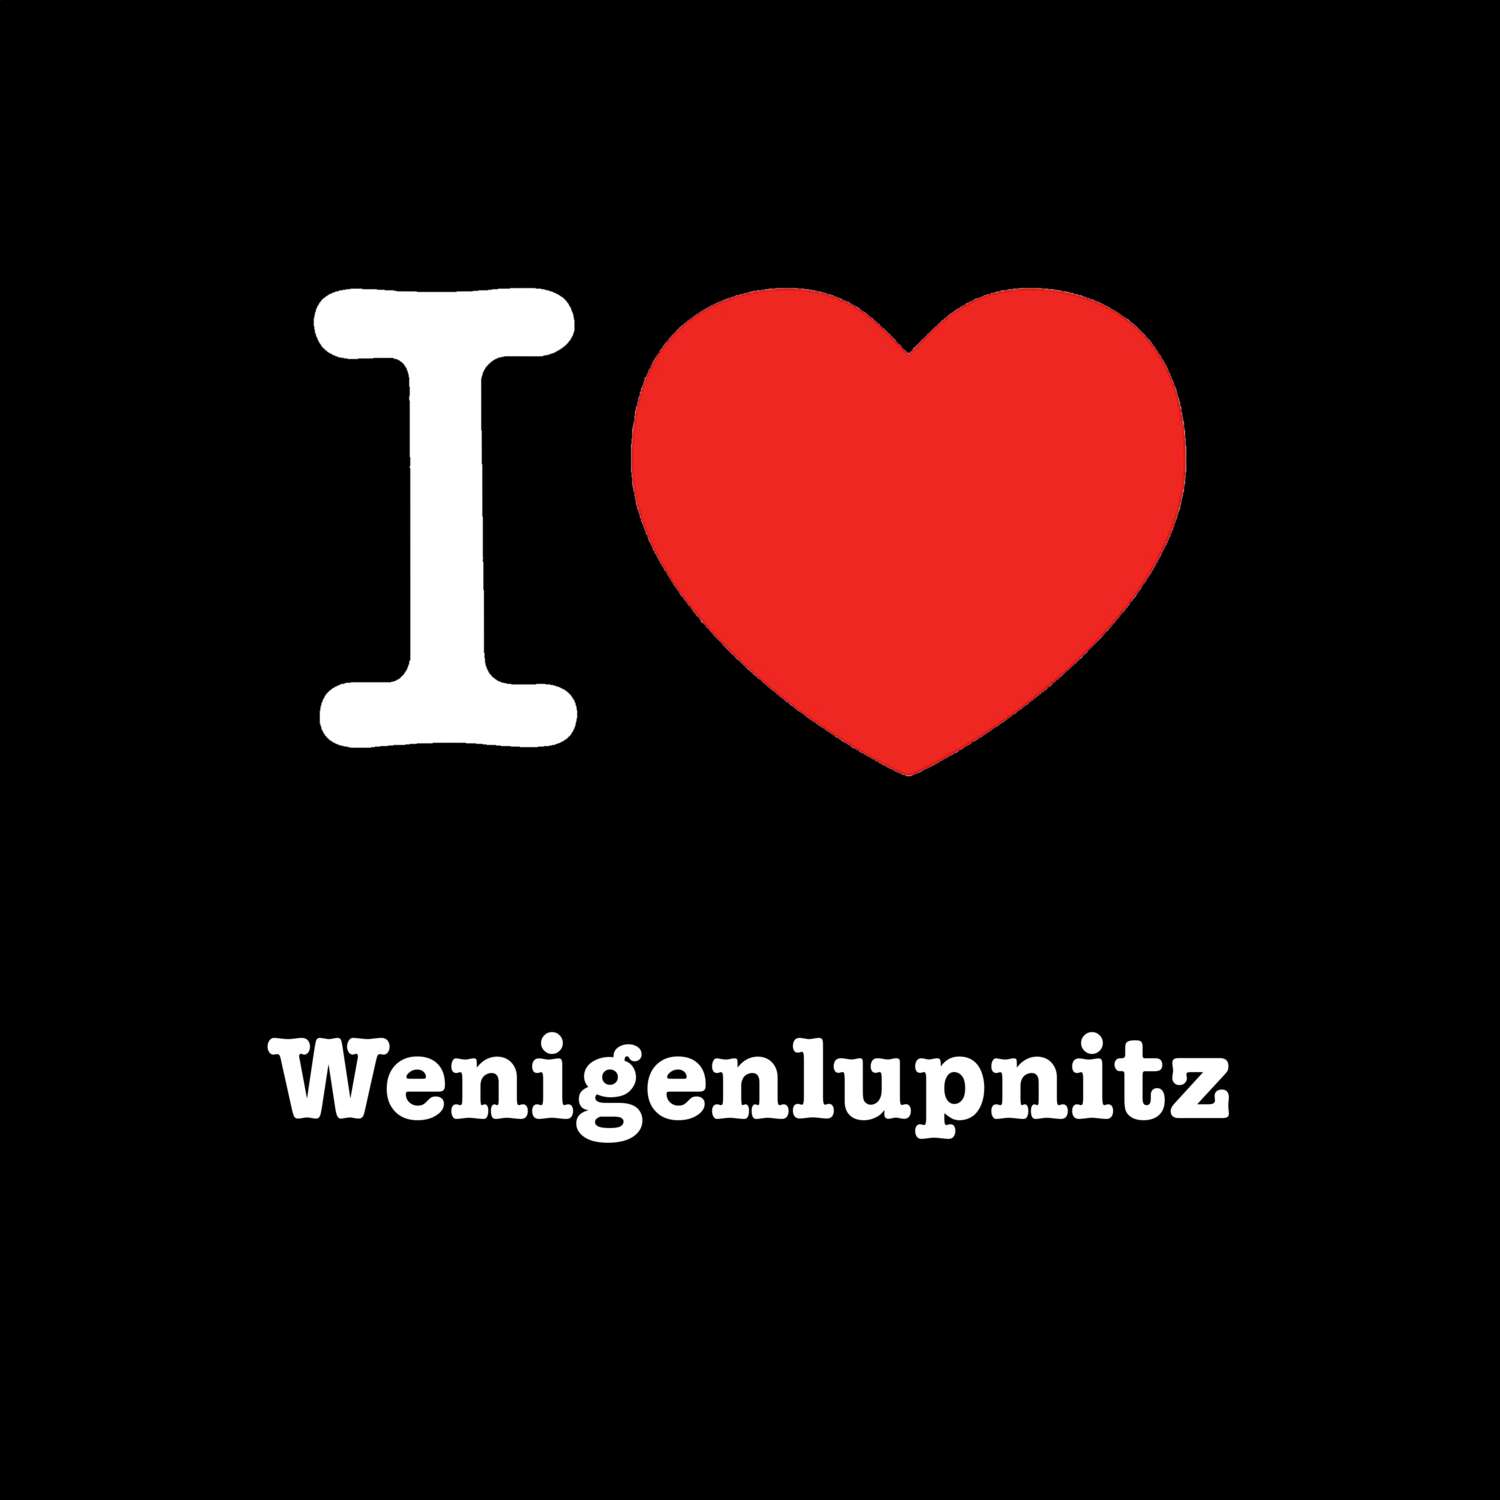 Wenigenlupnitz T-Shirt »I love«